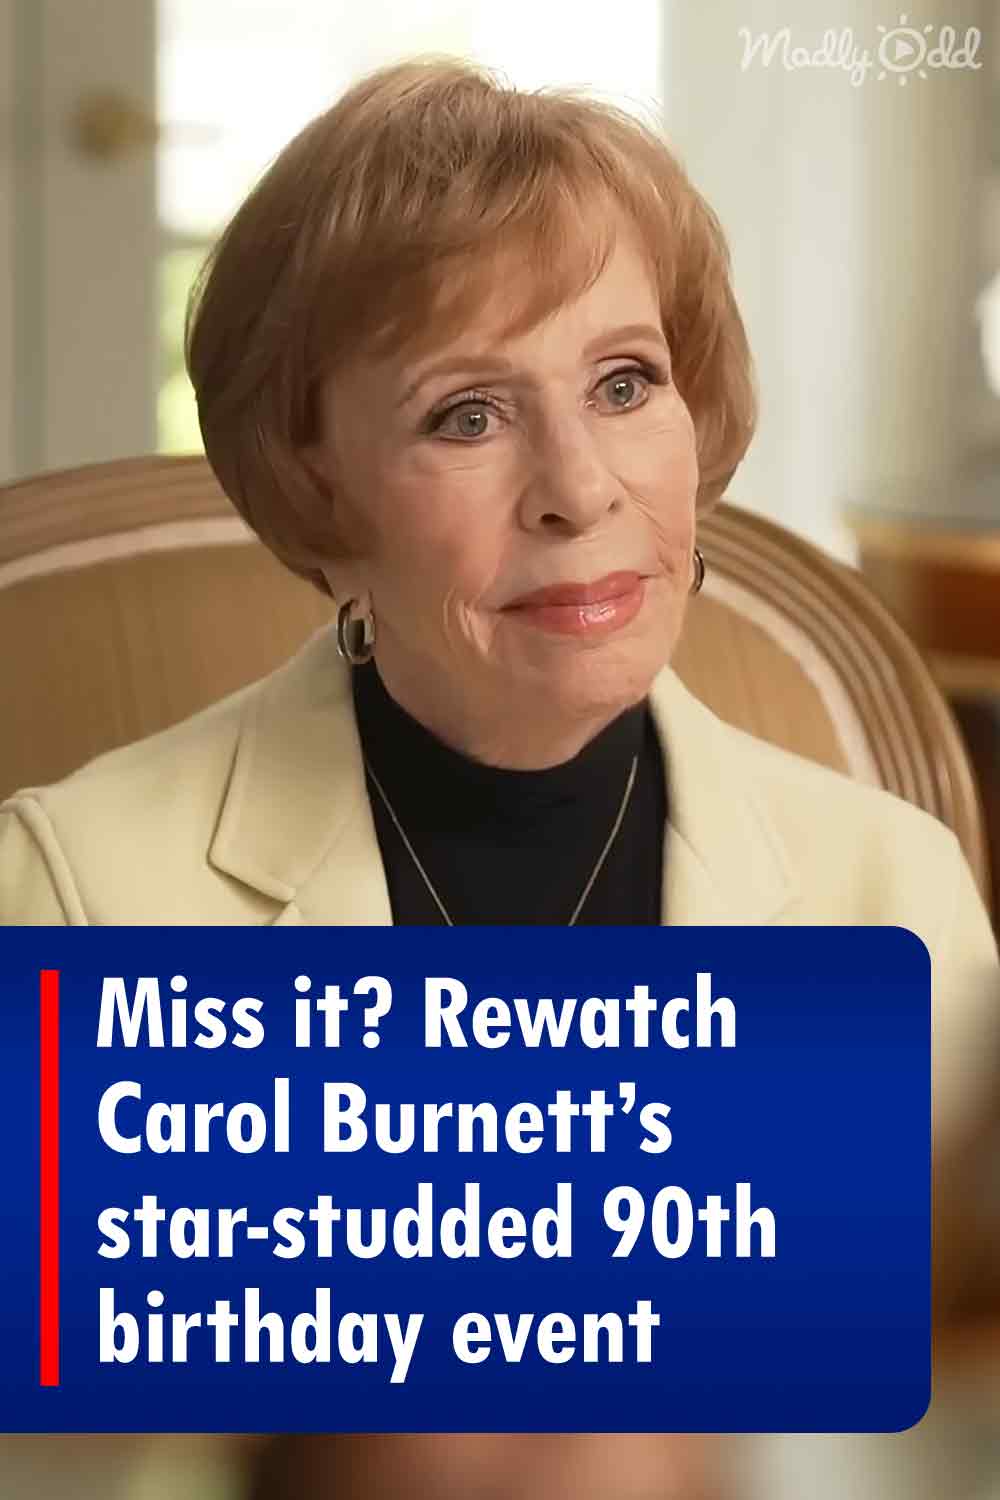 Miss it? Rewatch Carol Burnett’s star-studded 90th birthday event